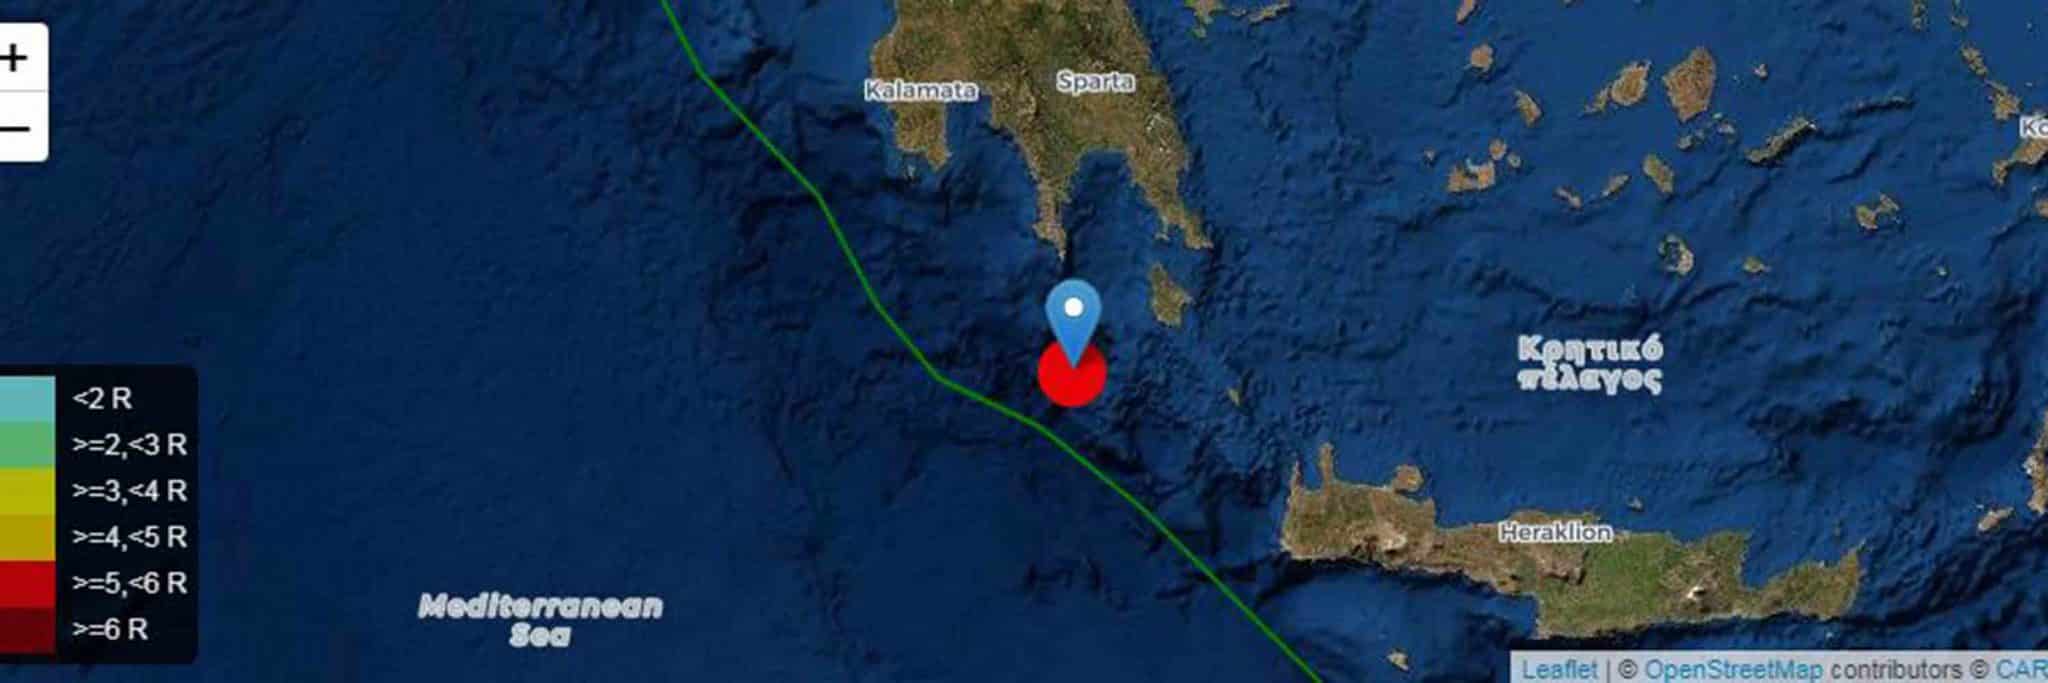 seismos kithira scaled - Ισχυρός σεισμός 5 Ρίχτερ στα Κύθηρα – Ανησυχία στο νησί